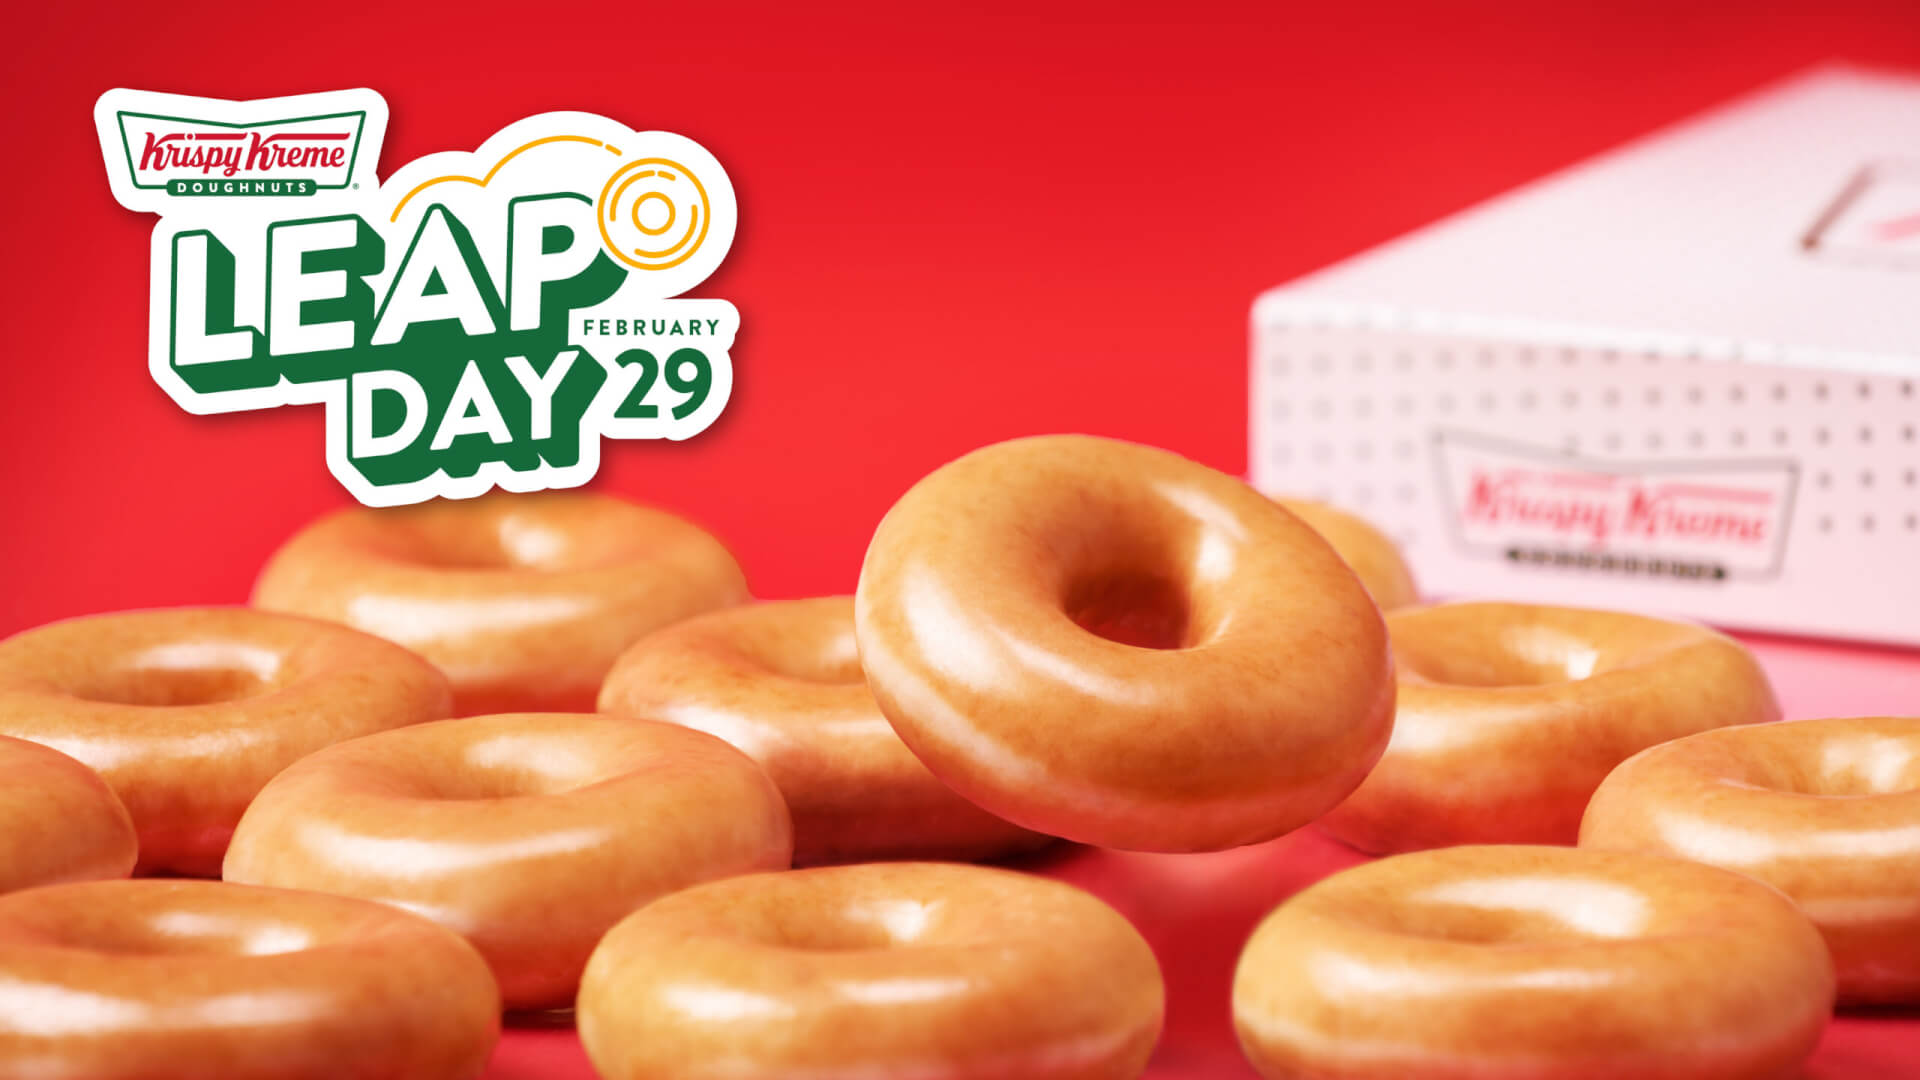 Krispy Kreme's Leap Day special - a dozen glazed doughnuts